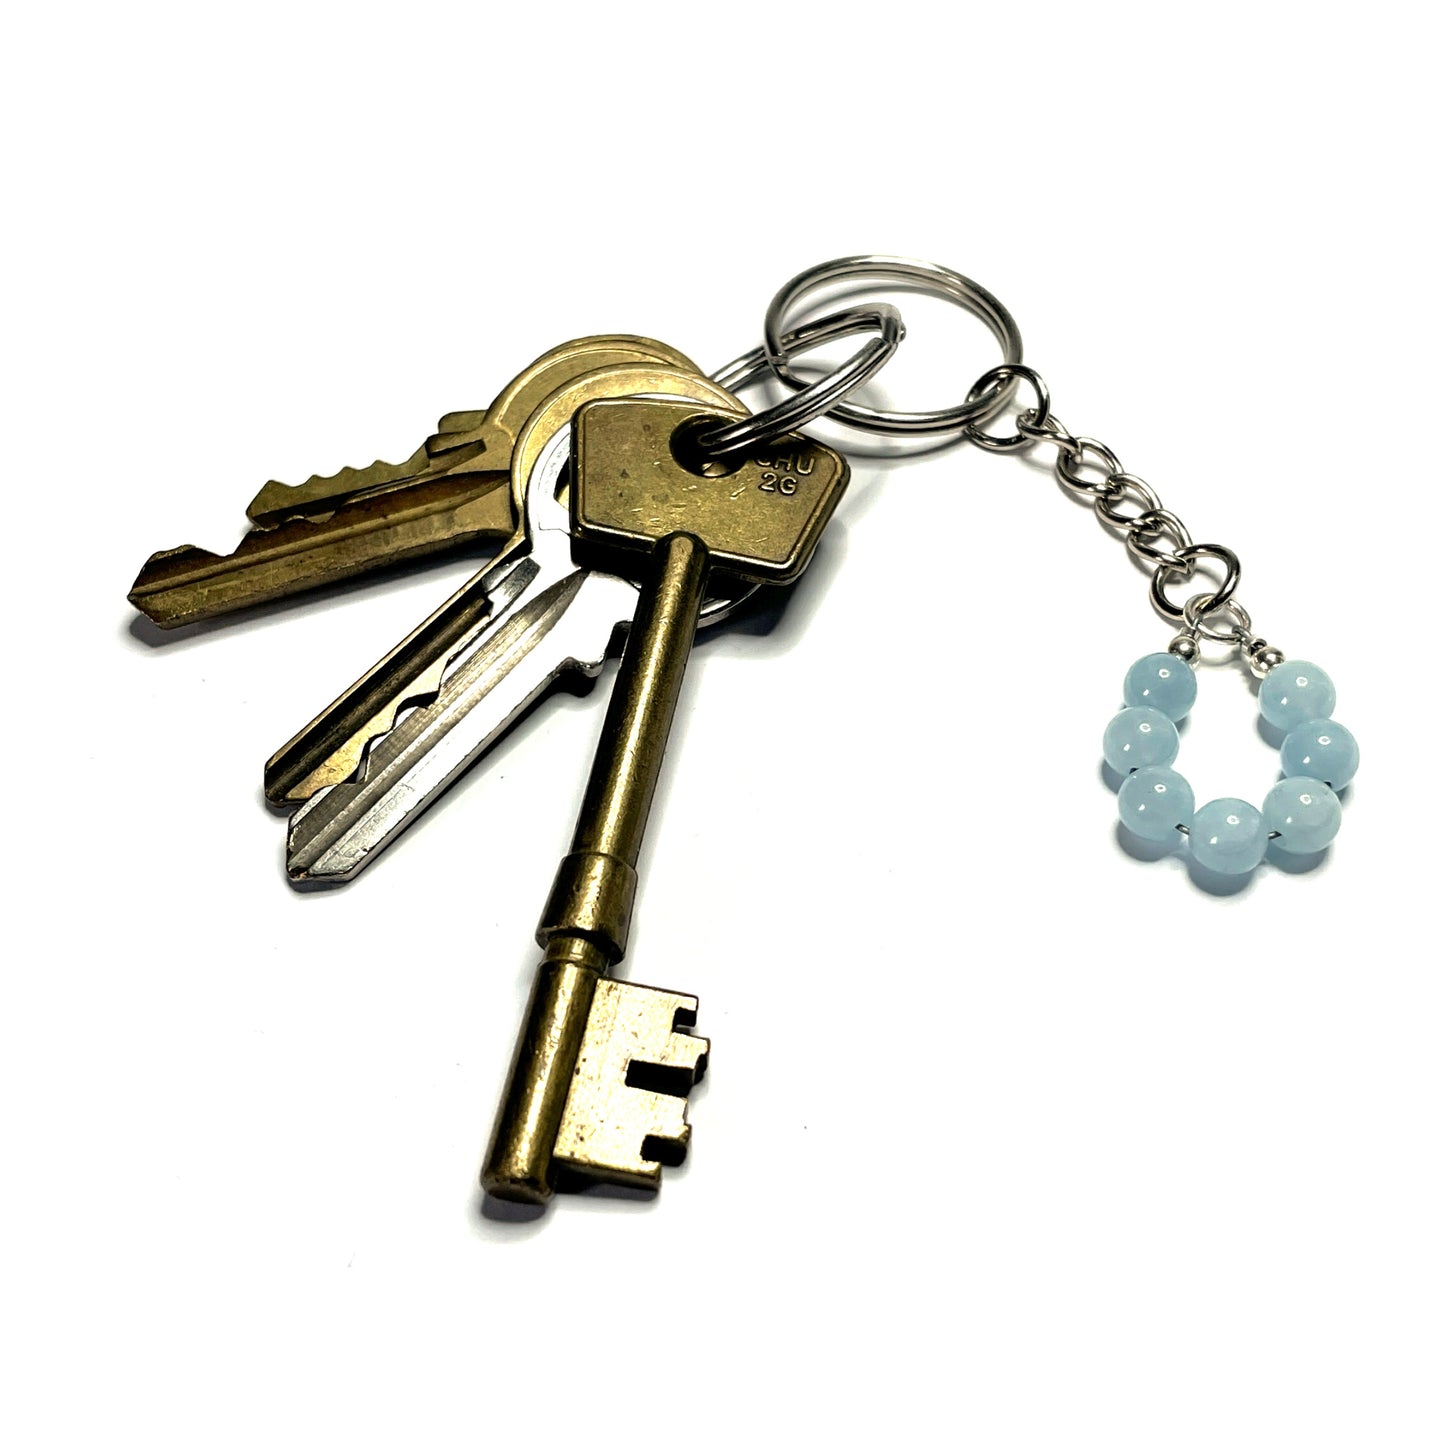 Aquamarine keychain with keys